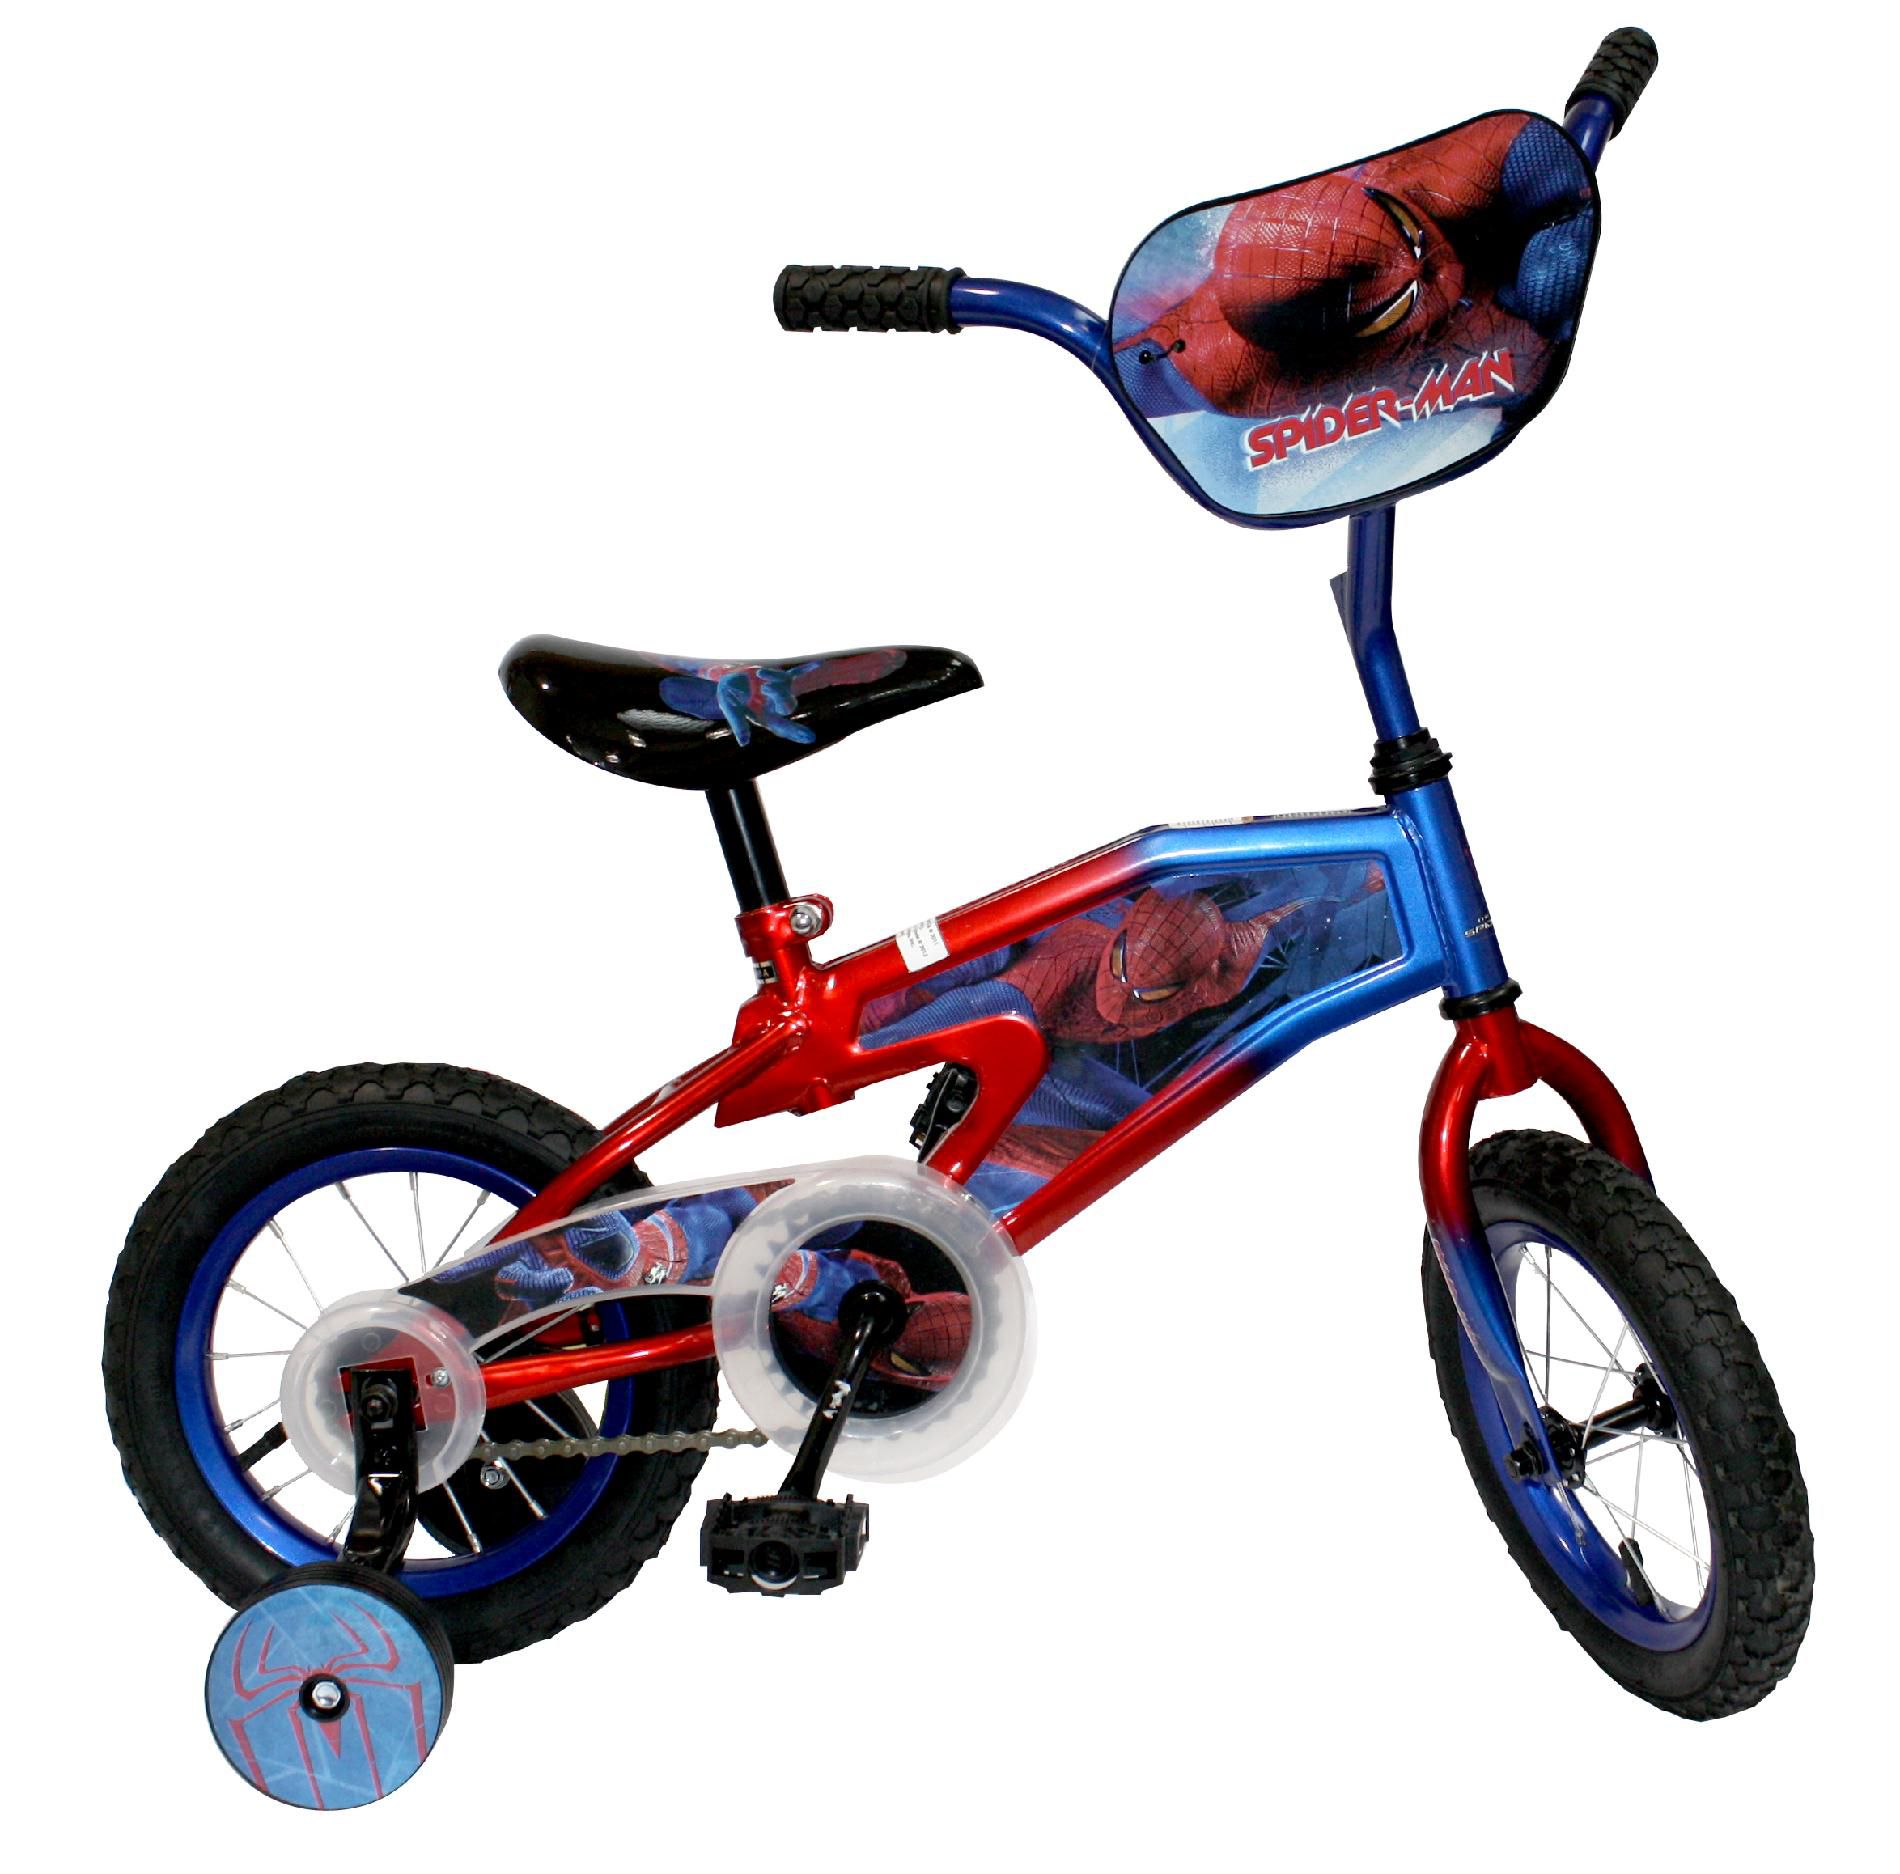 Street Flyers "Spiderman" 12" Bike - Red